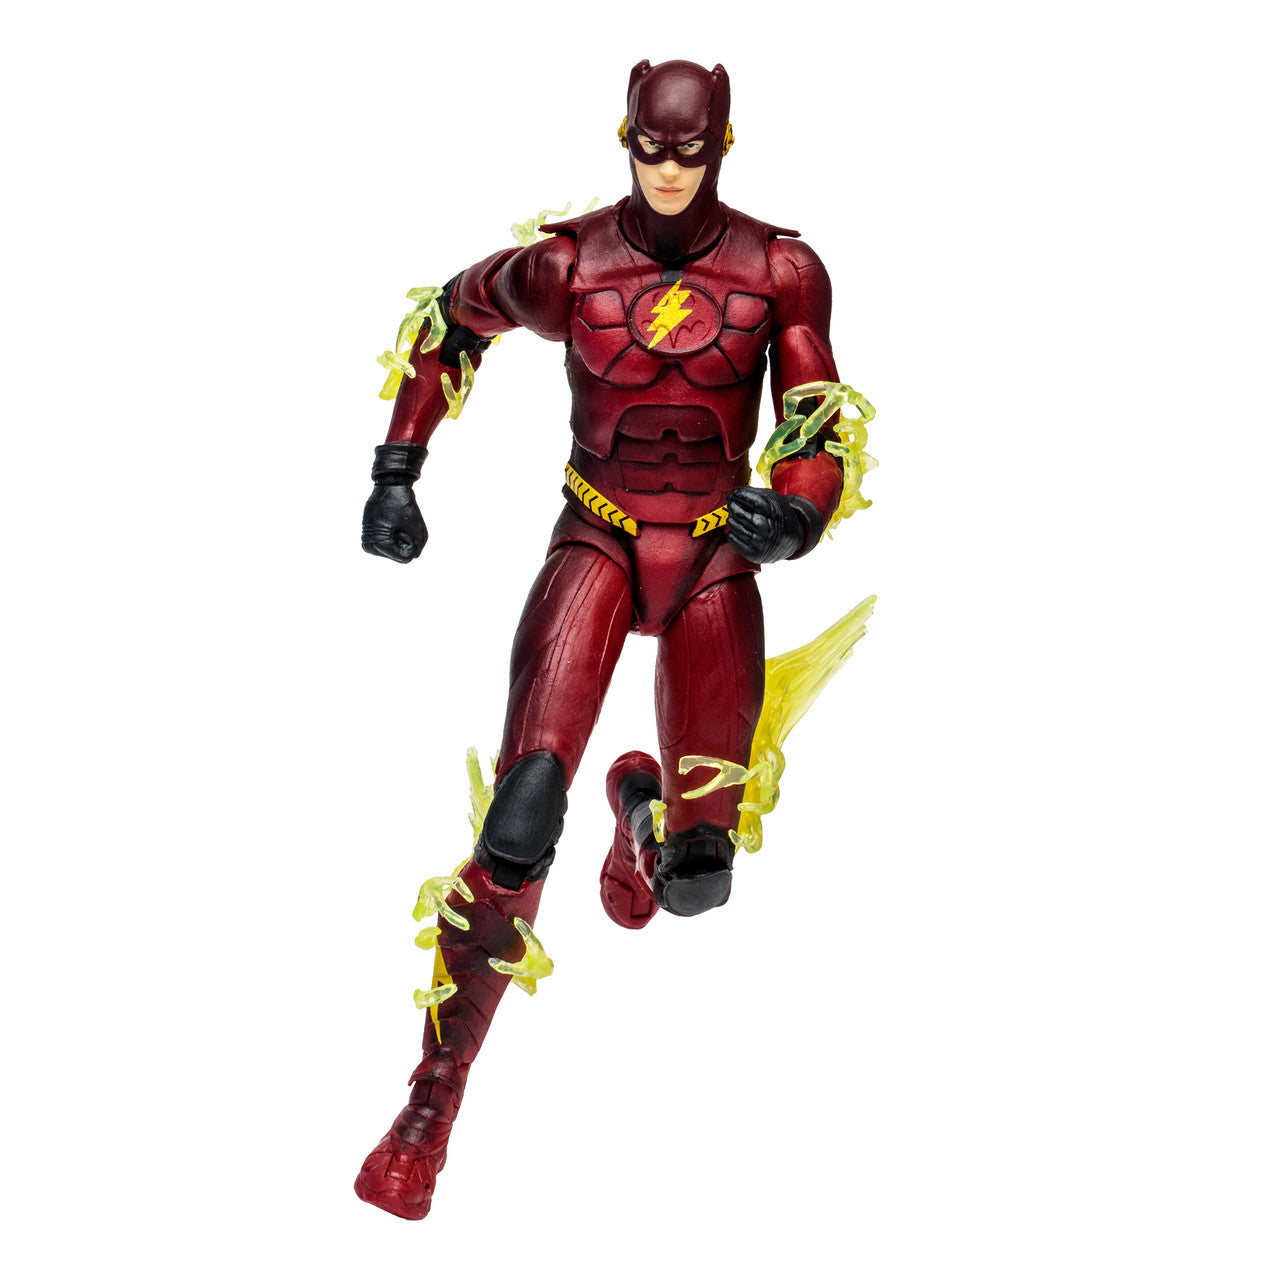 DC Flash (Batman Suit) Action Figure by McFarlane Toys -McFarlane Toys - India - www.superherotoystore.com